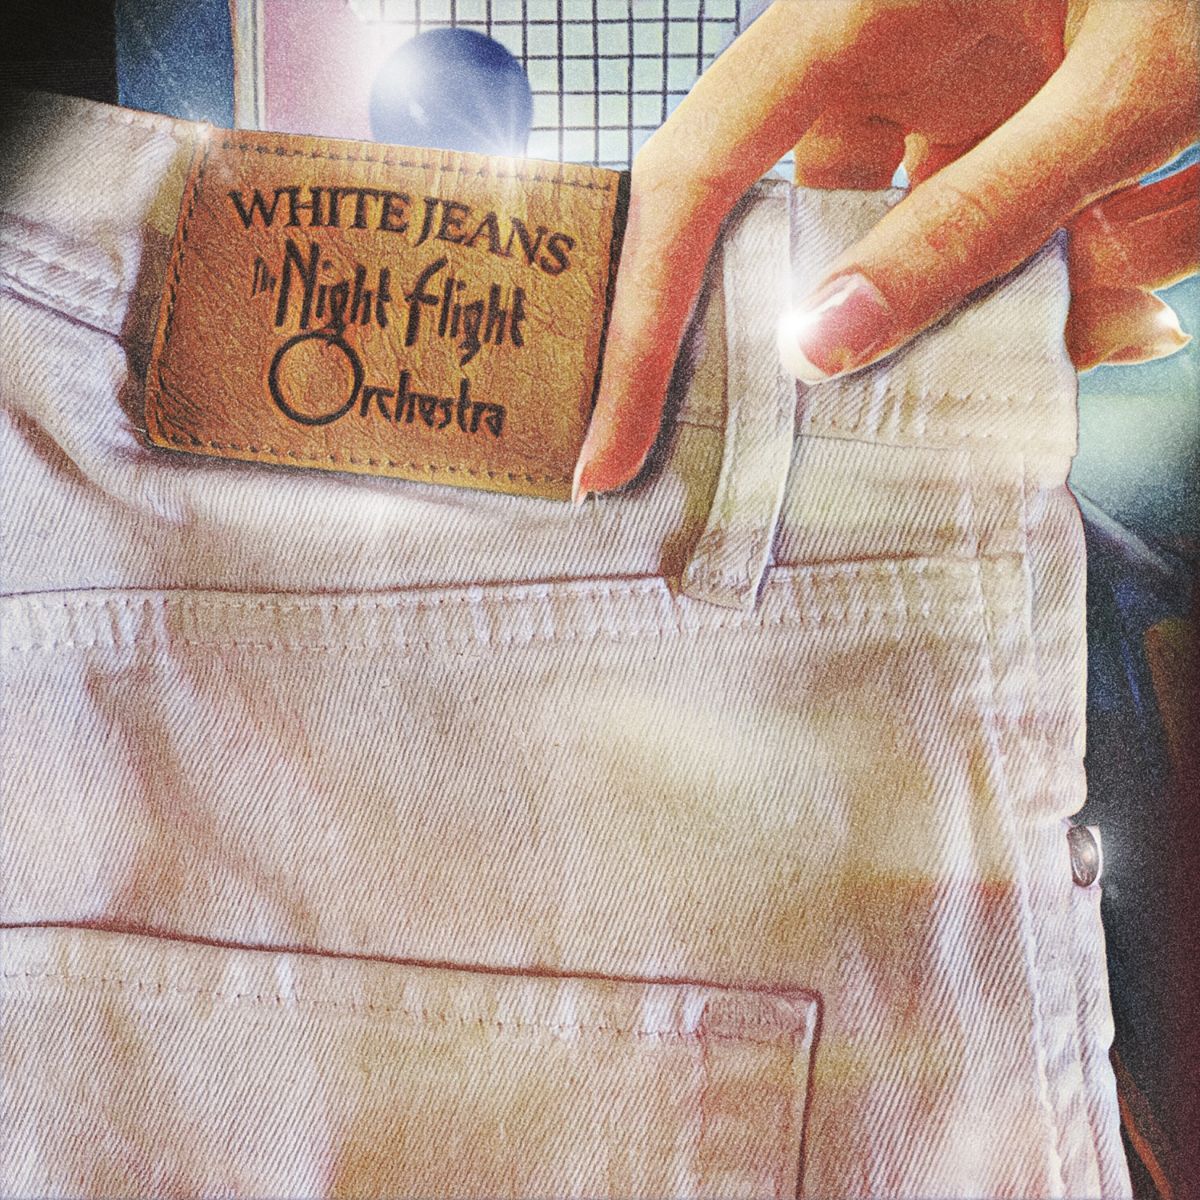 'White Jeans'-Video ist online